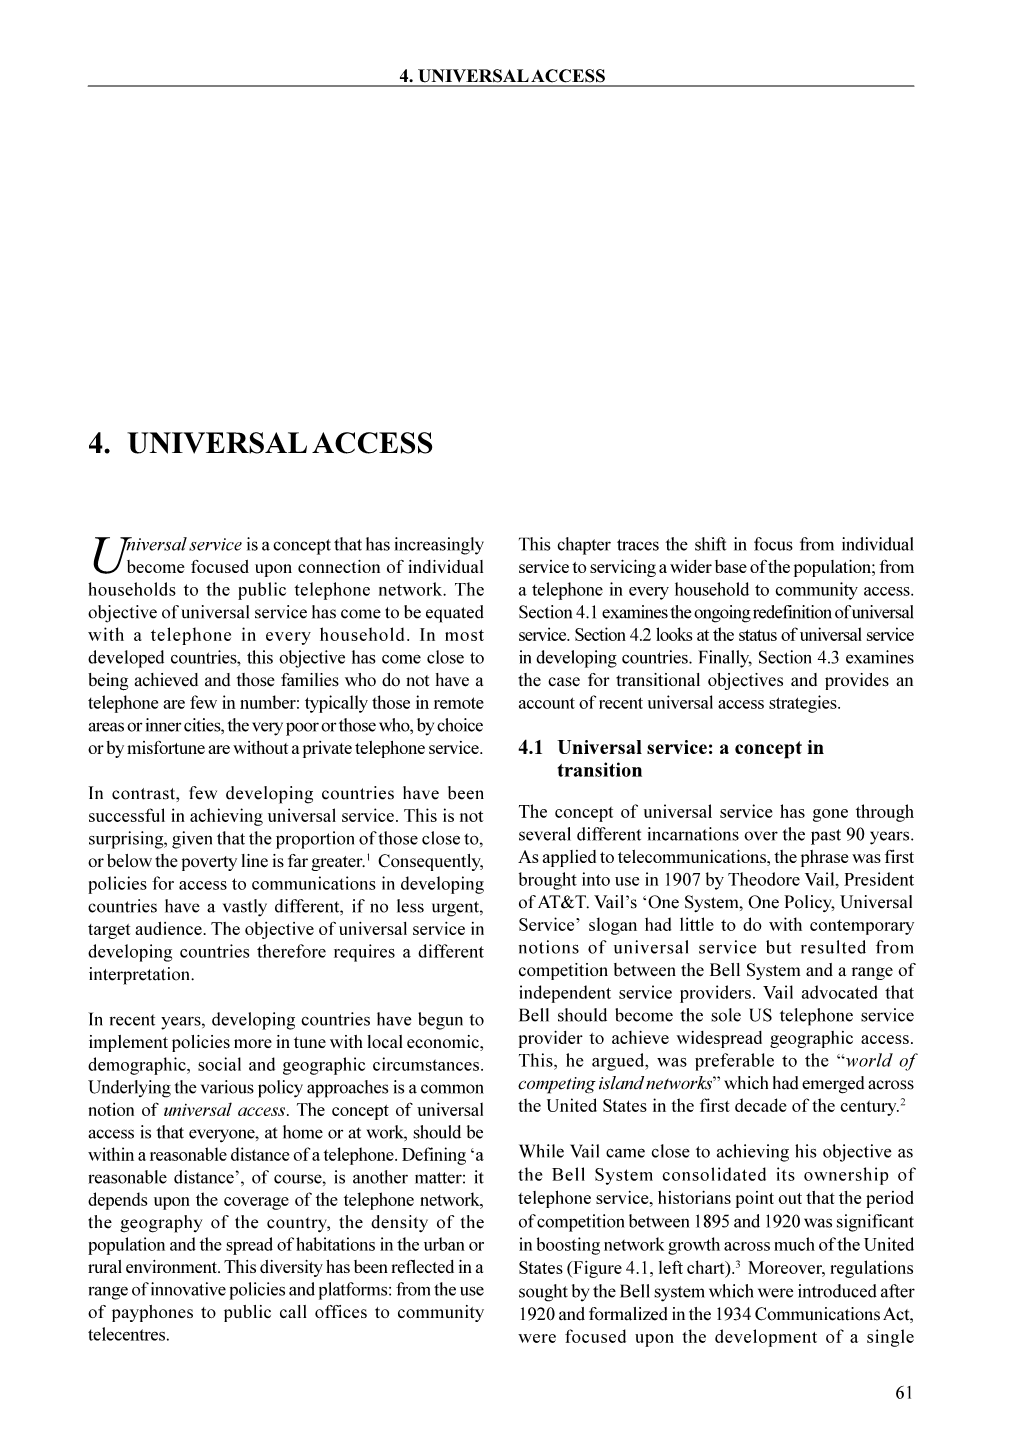 4. Universal Access